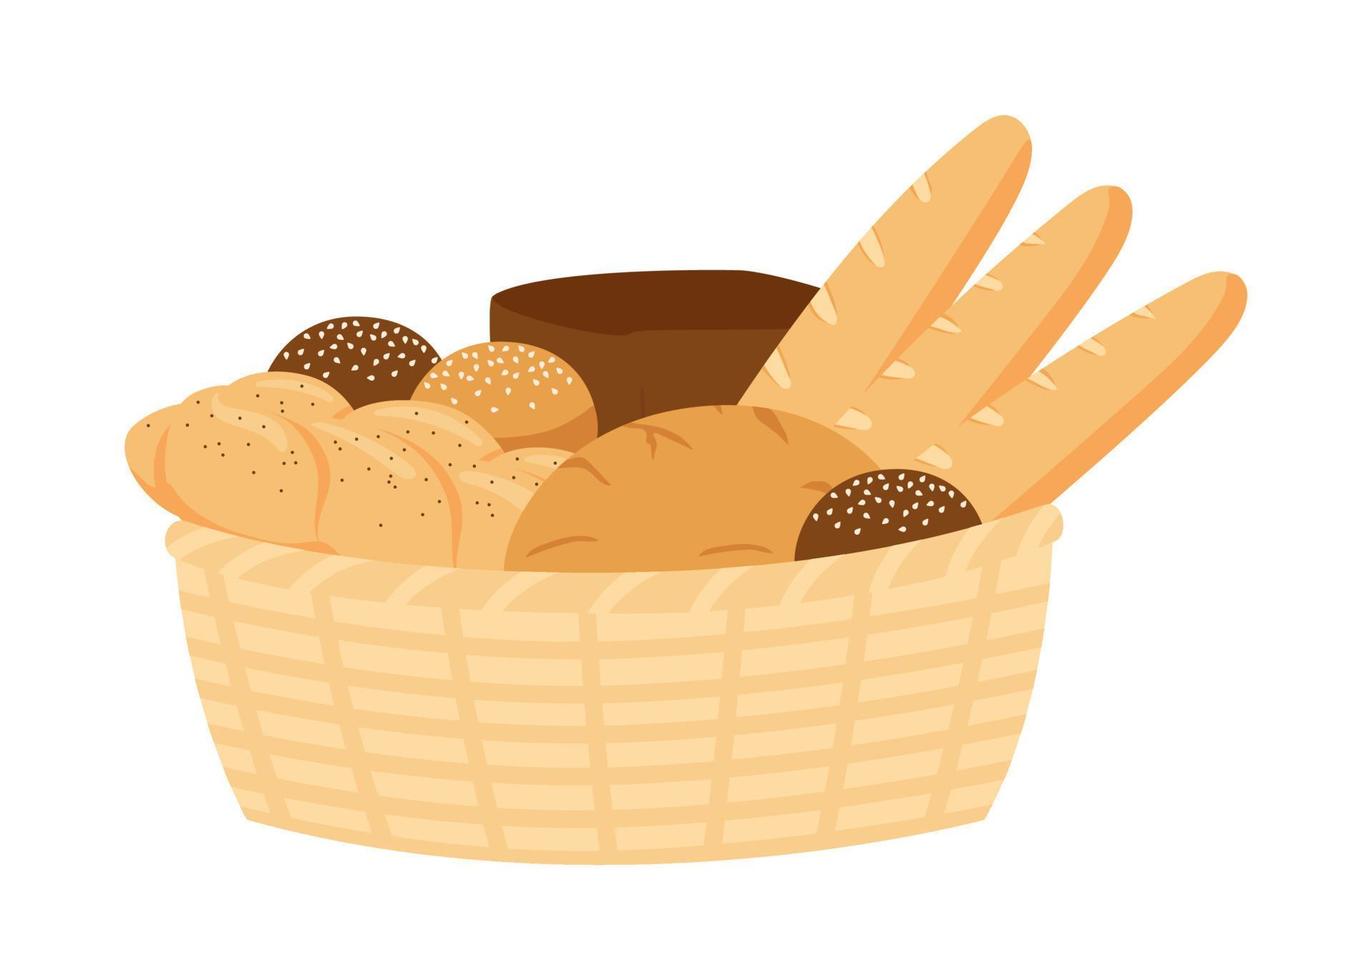 cesta de mimbre con pan de hojaldre de trigo, grano entero y centeno, comida de panadería, bollo. pan, ladrillo de pan, pan tostado, baguette francés, jalá. ilustración vectorial vector